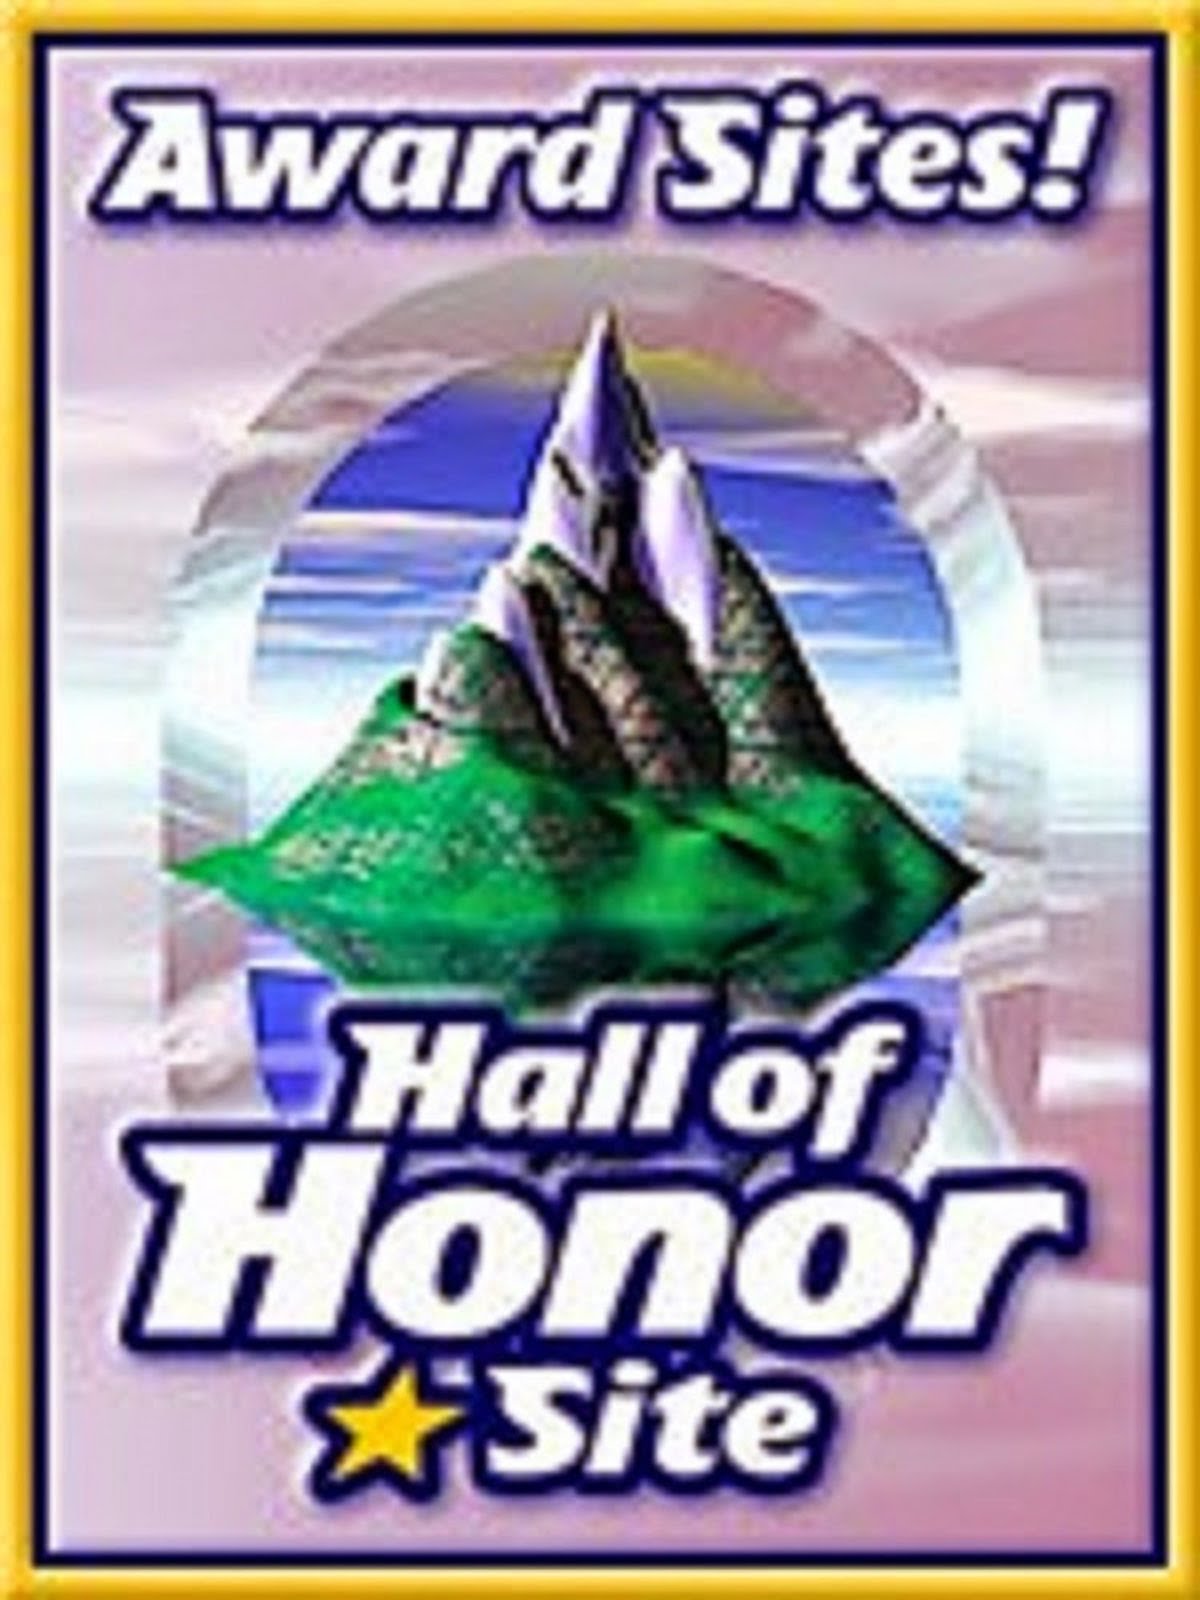 HALL OF HONOR - WEB AWARD